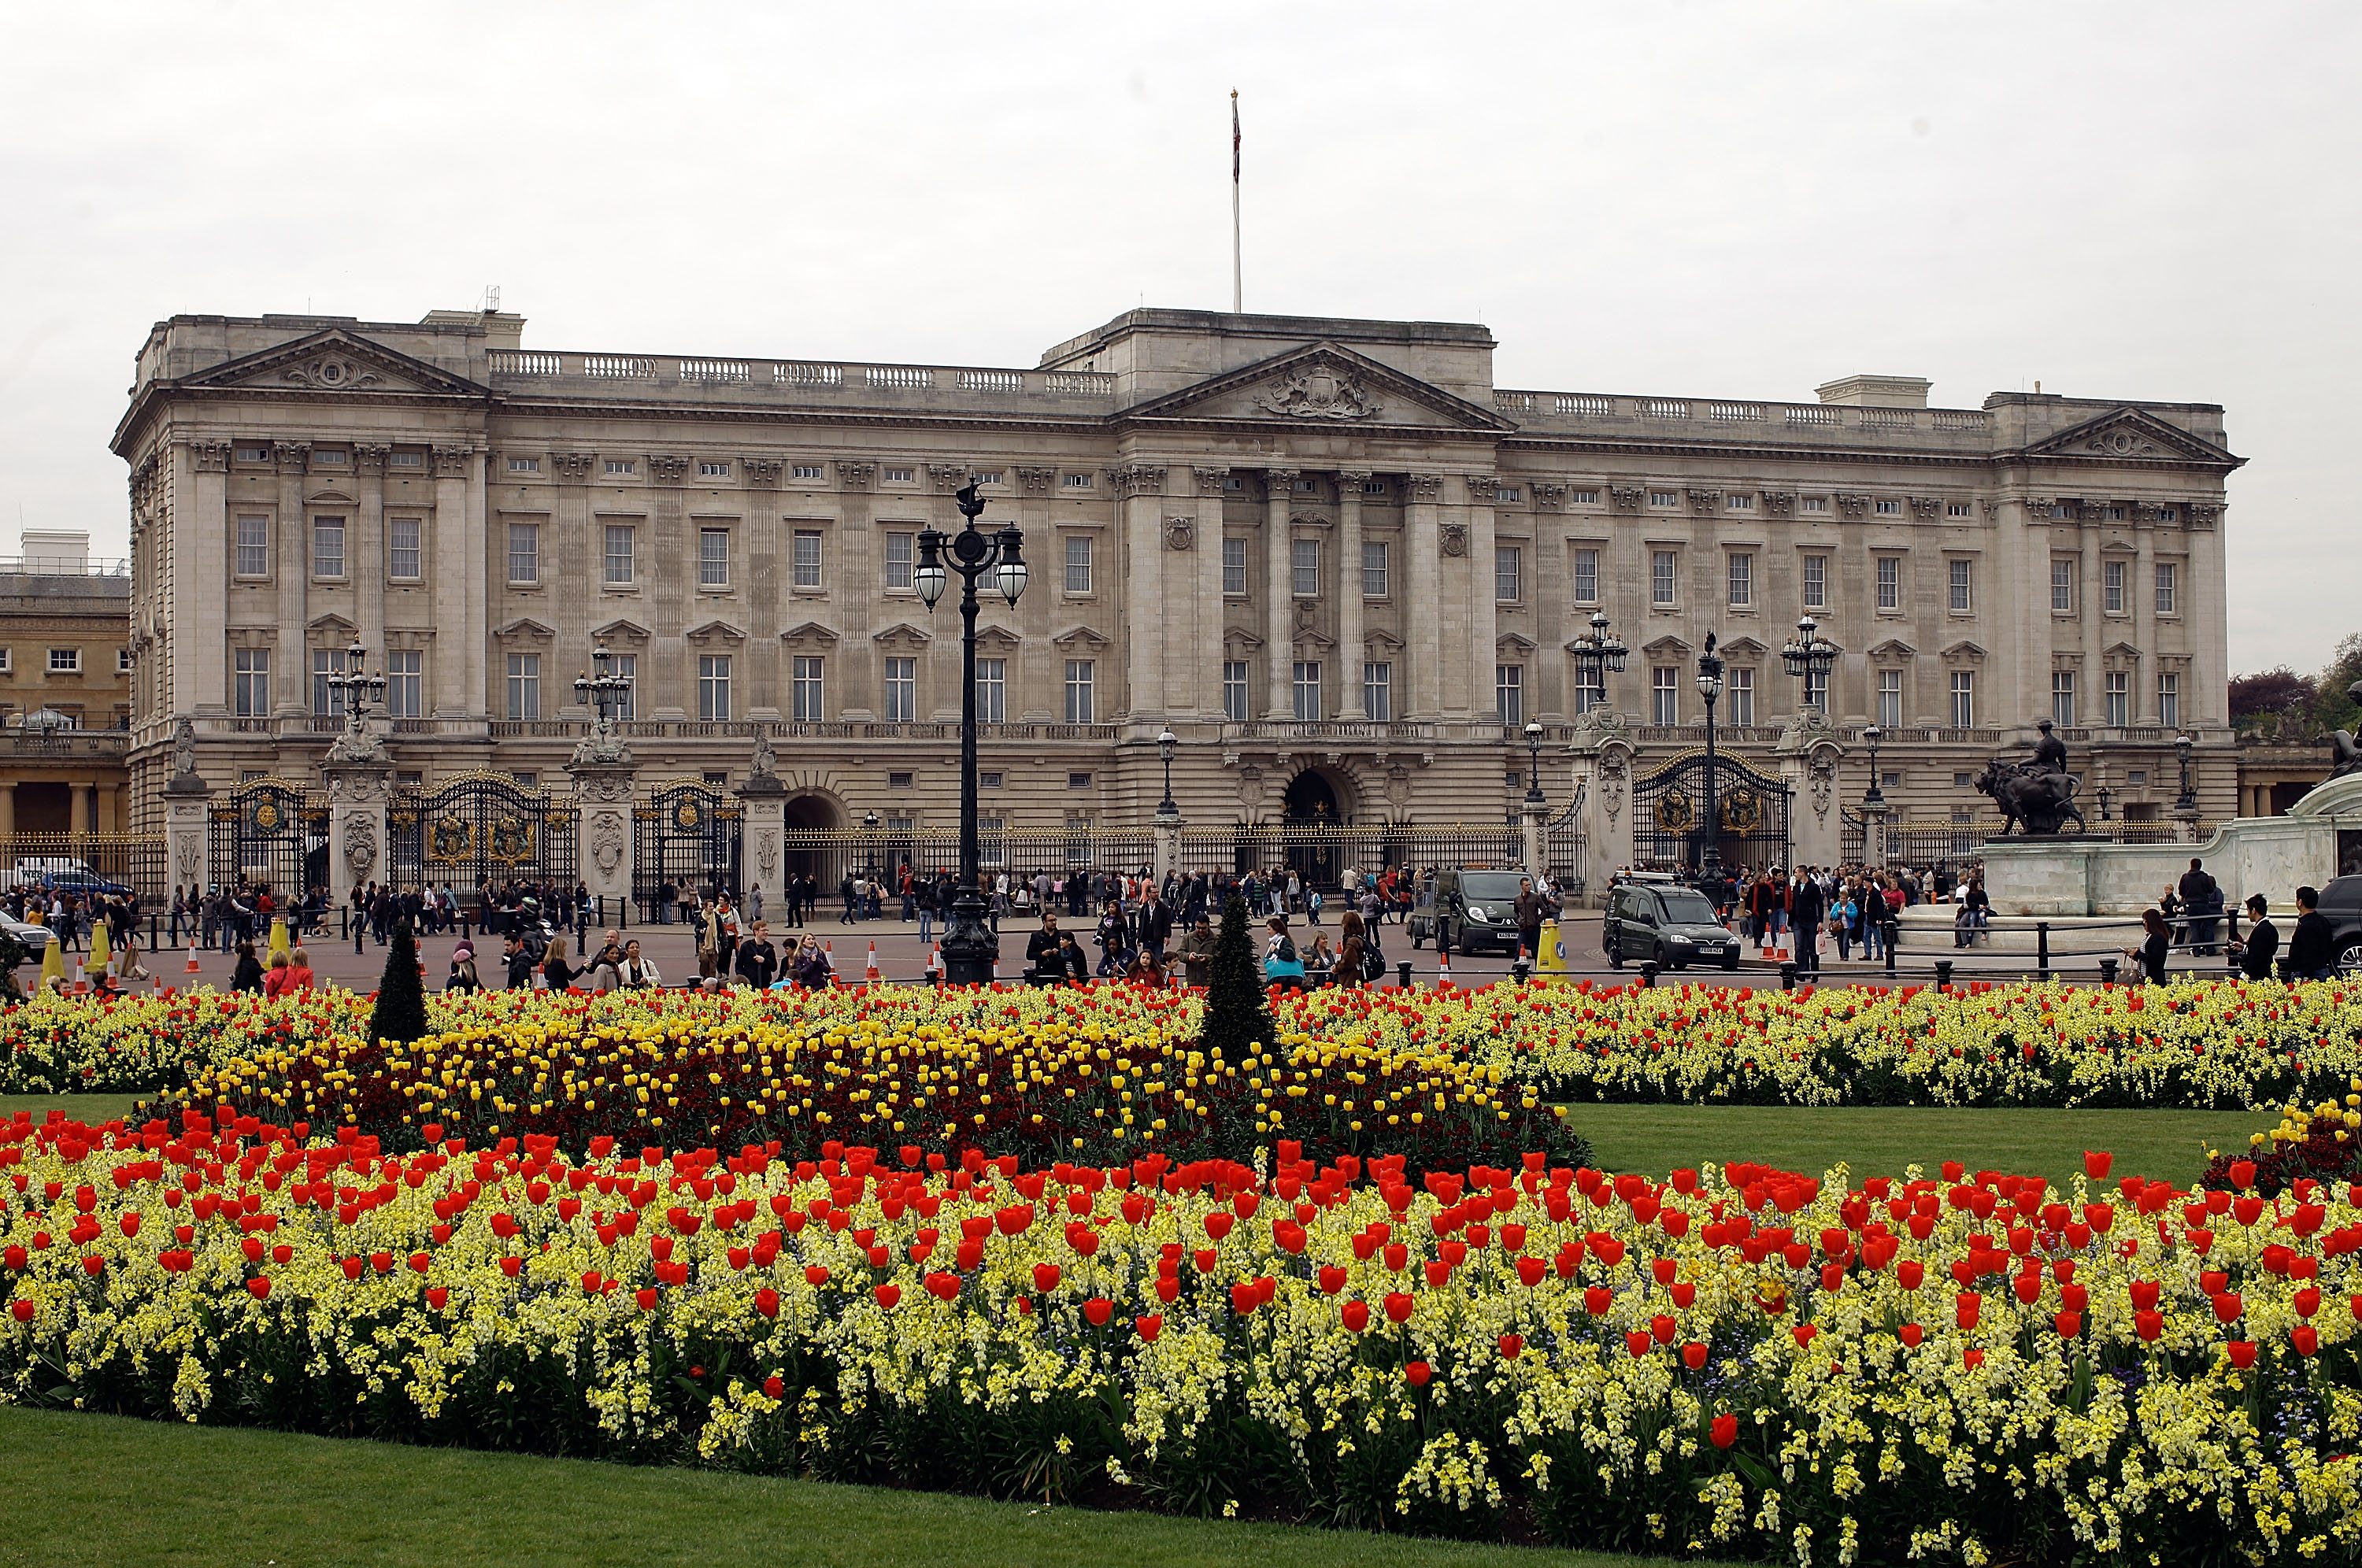 Buckingham Palace and Gardens